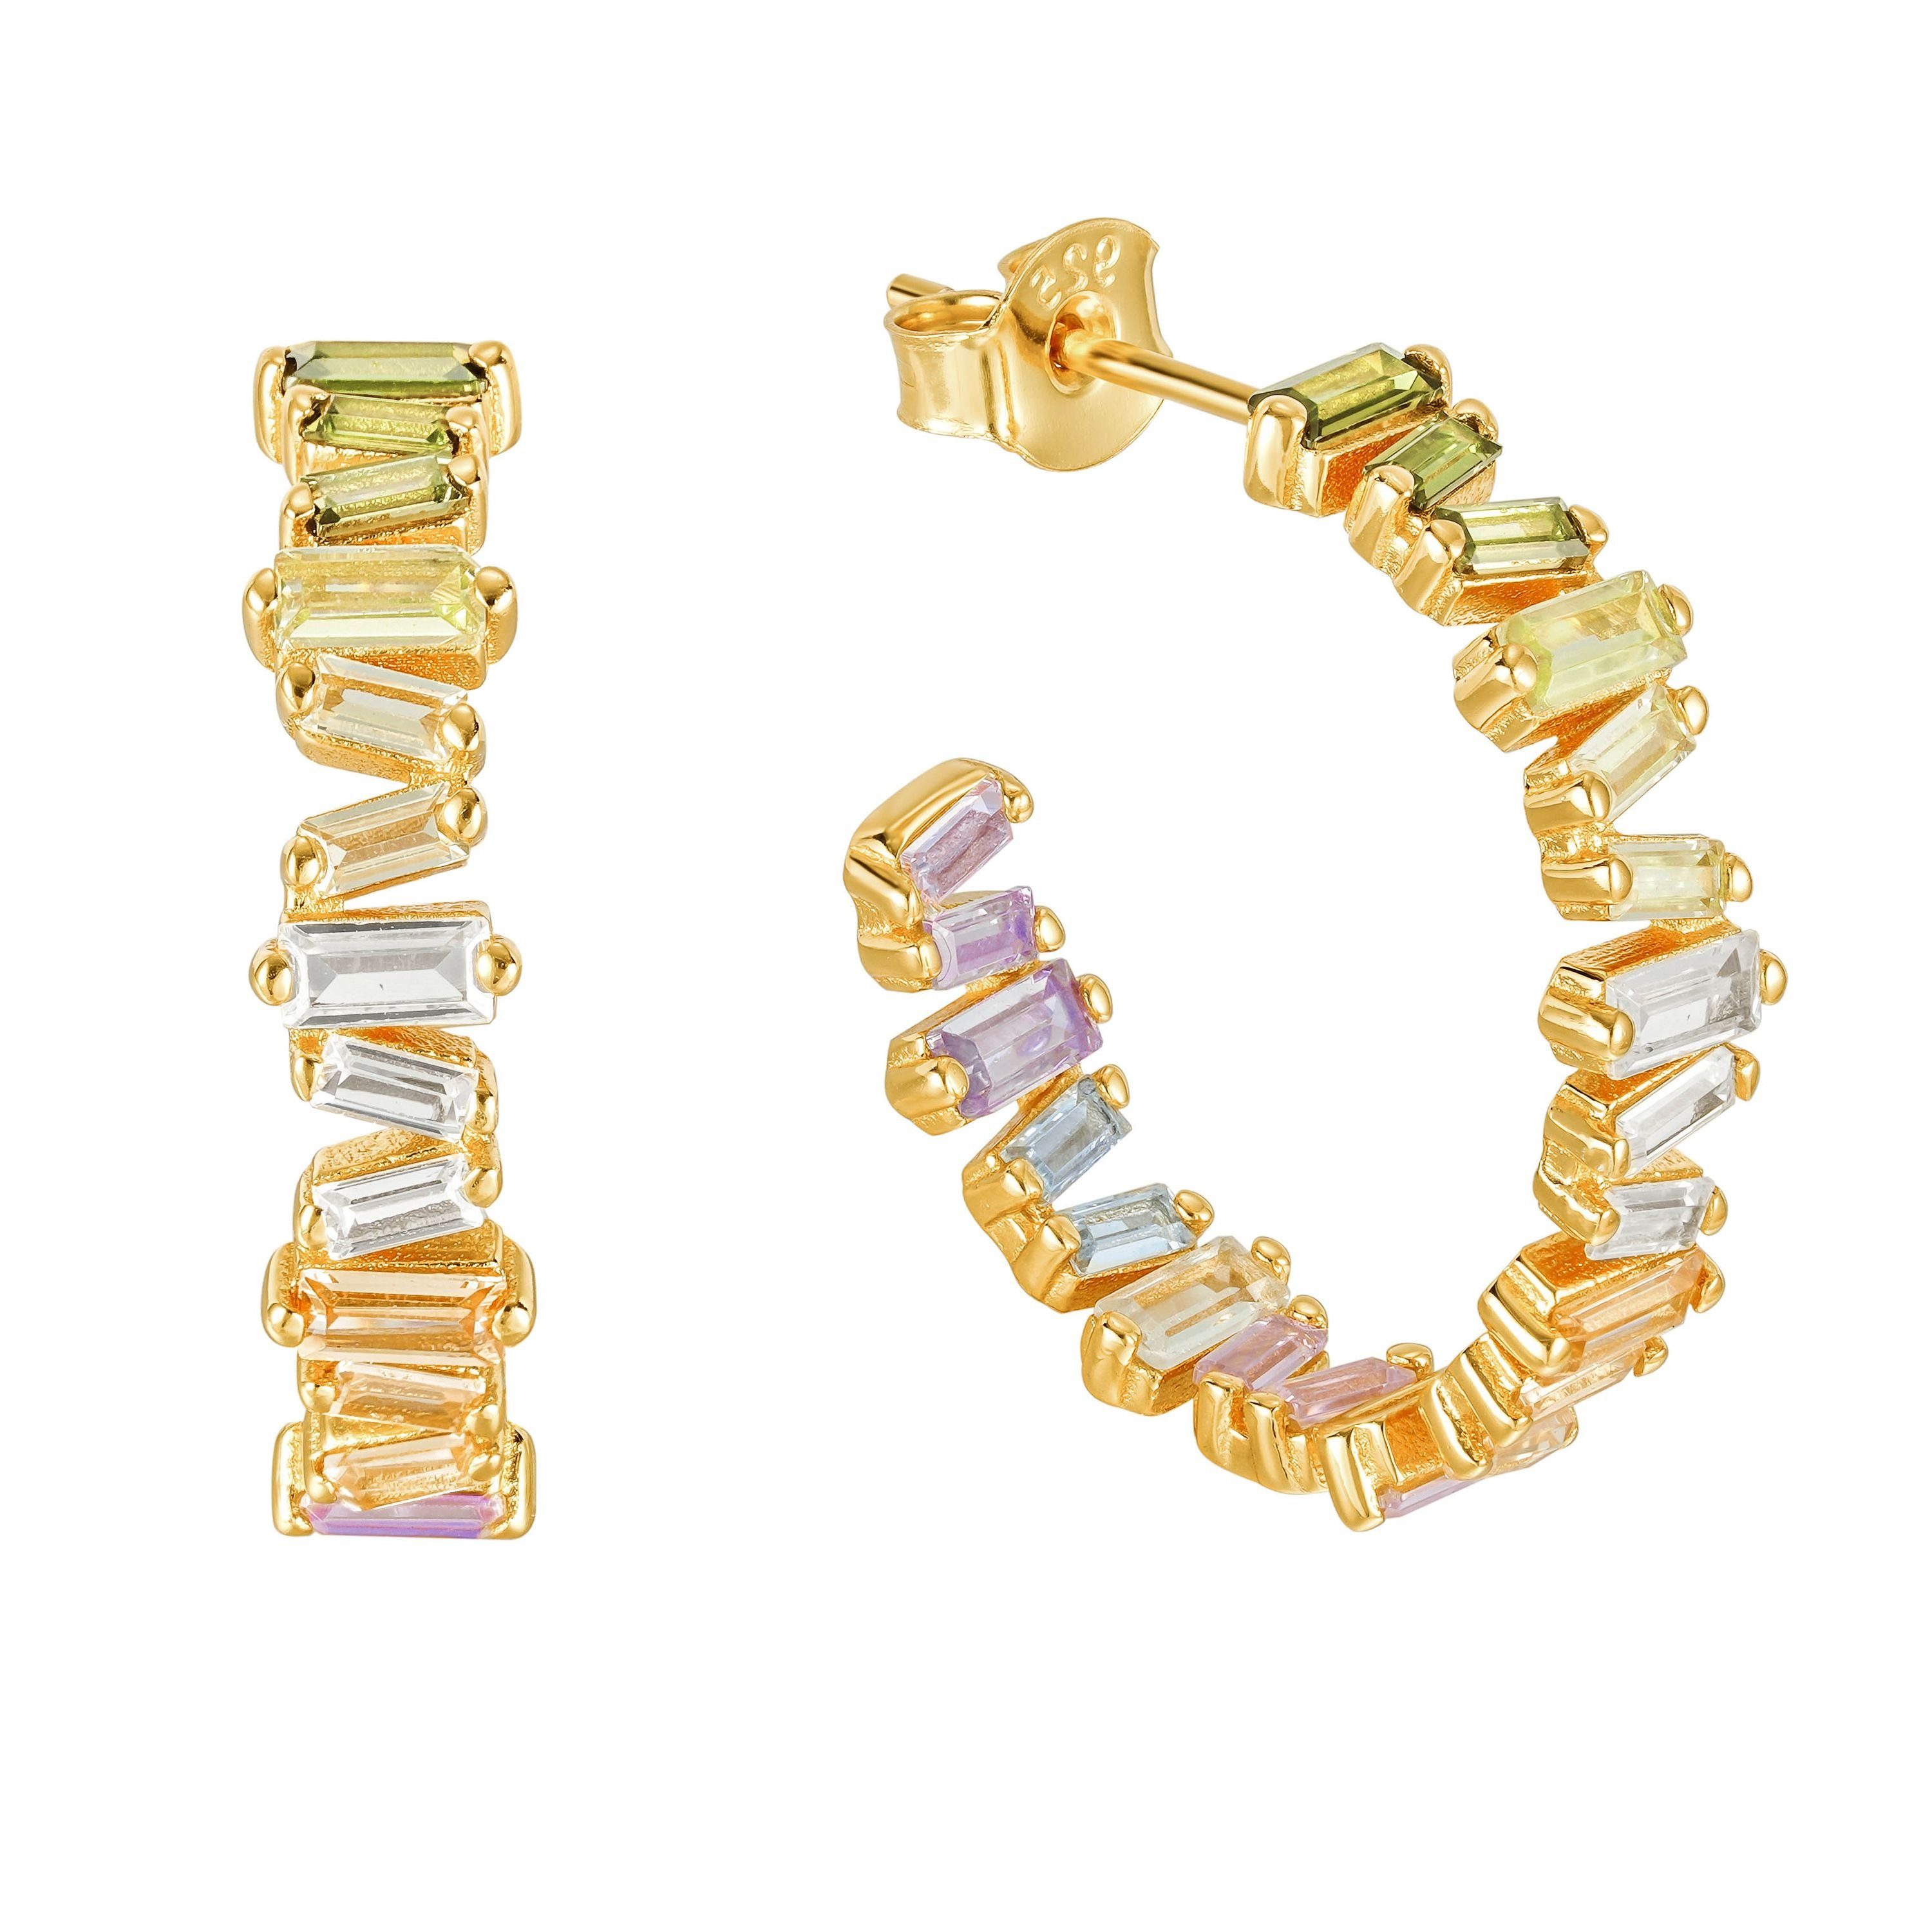 Brandlinger Paar Creolen Ohrringe Sevilla, Silber 925 vergoldet, Ohrringe mit Farbverlauf pastell